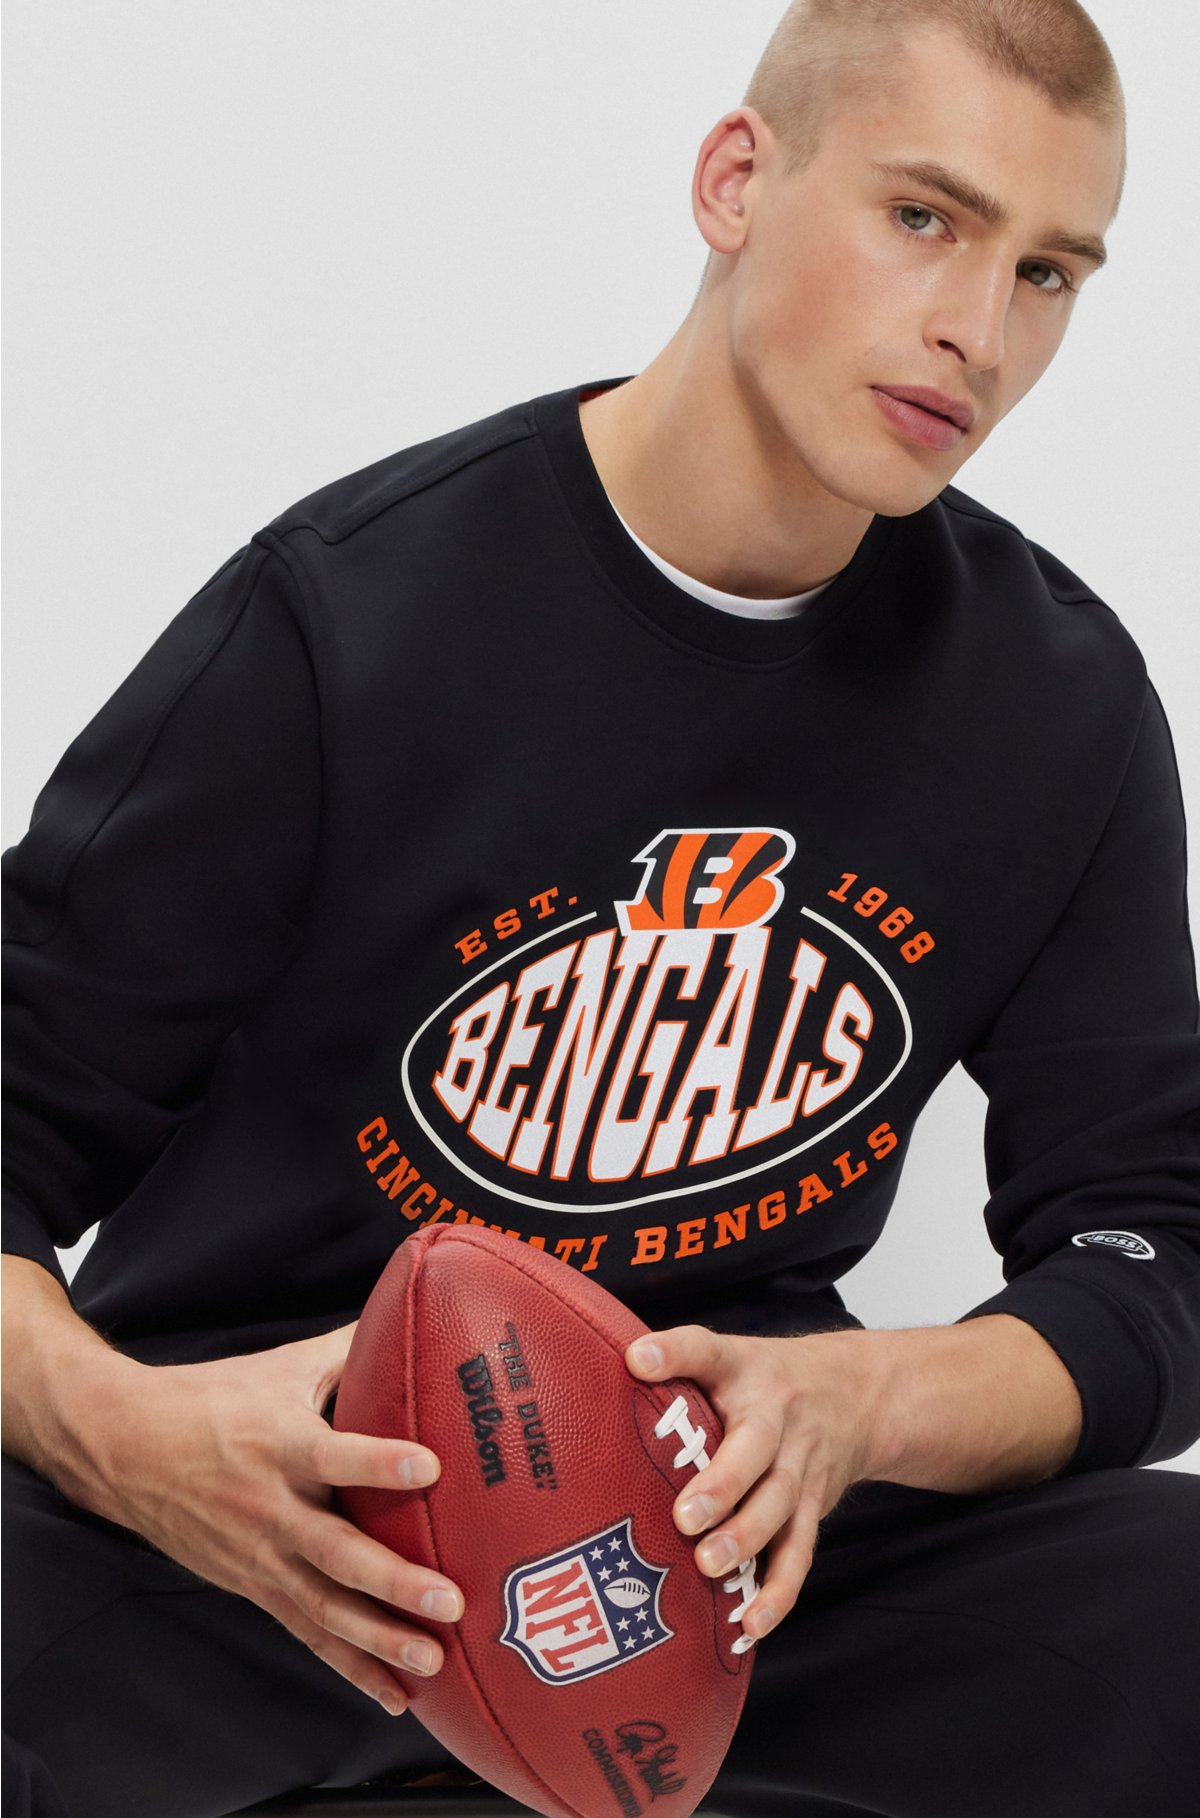 BOSS x NFL cotton-blend sweatshirt with collaborative branding, Bengals